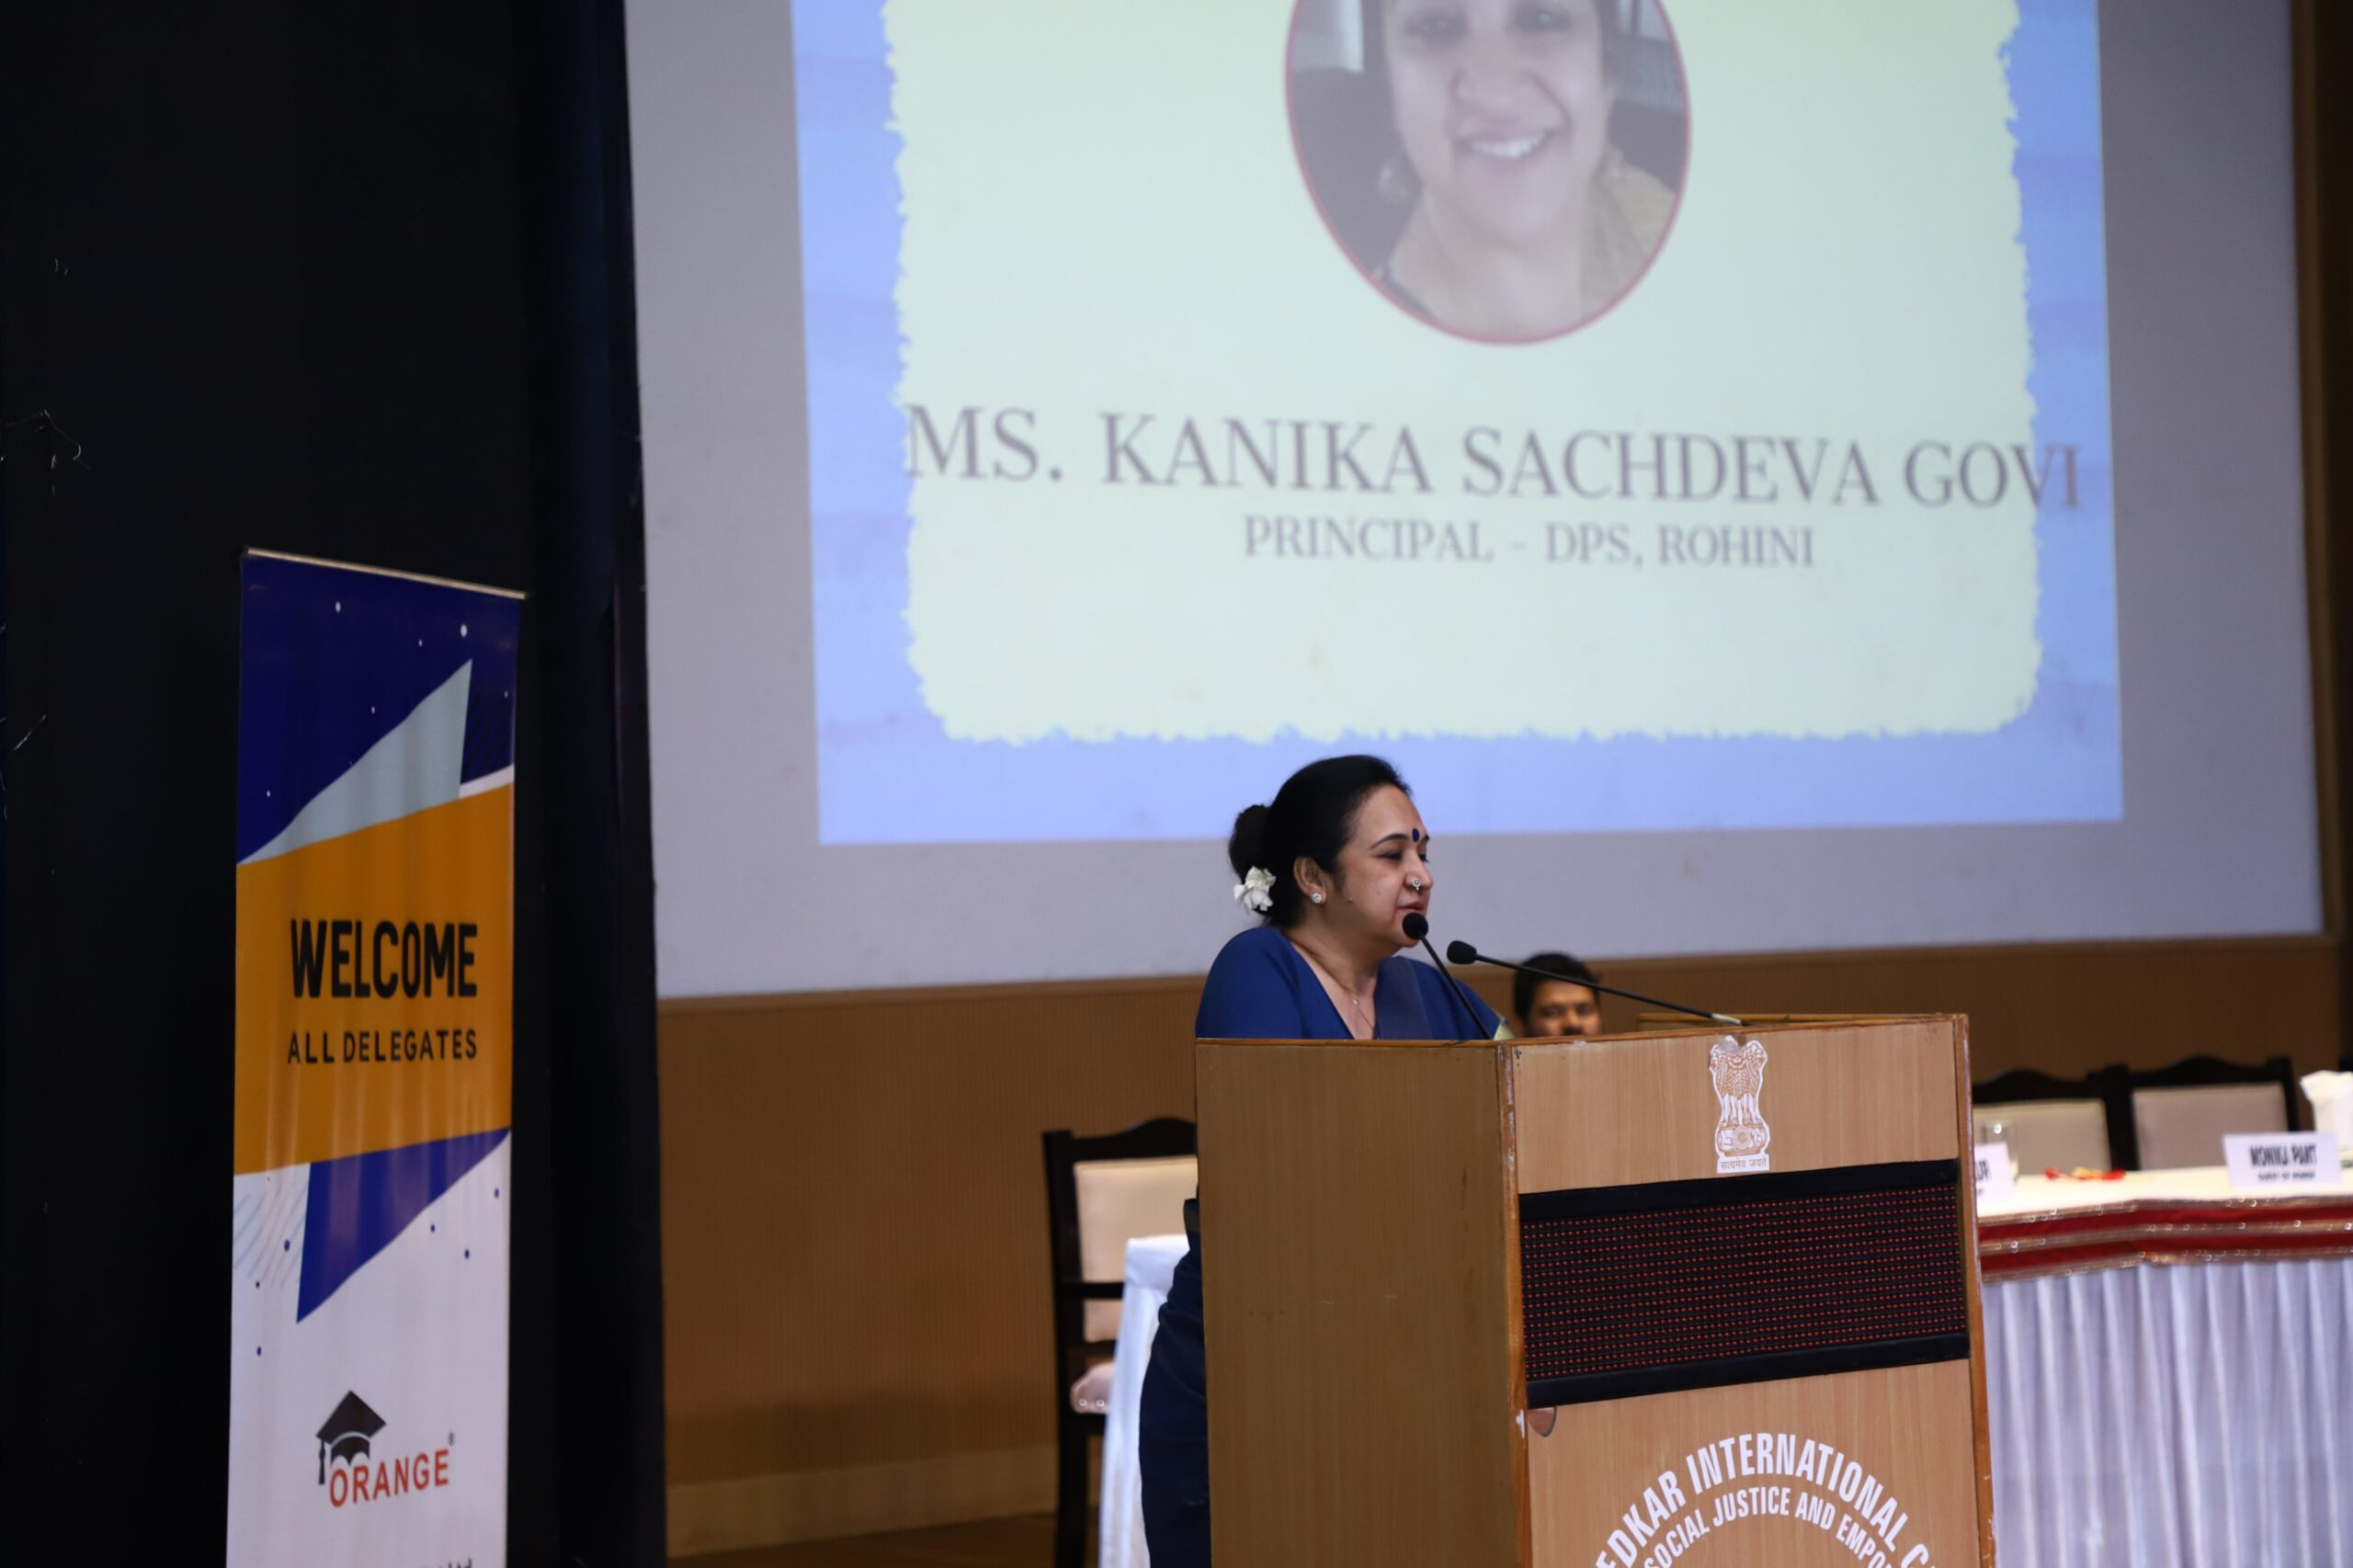 Ms. Kanika Sachdeva Govi - Principal, DPS School - Rohini